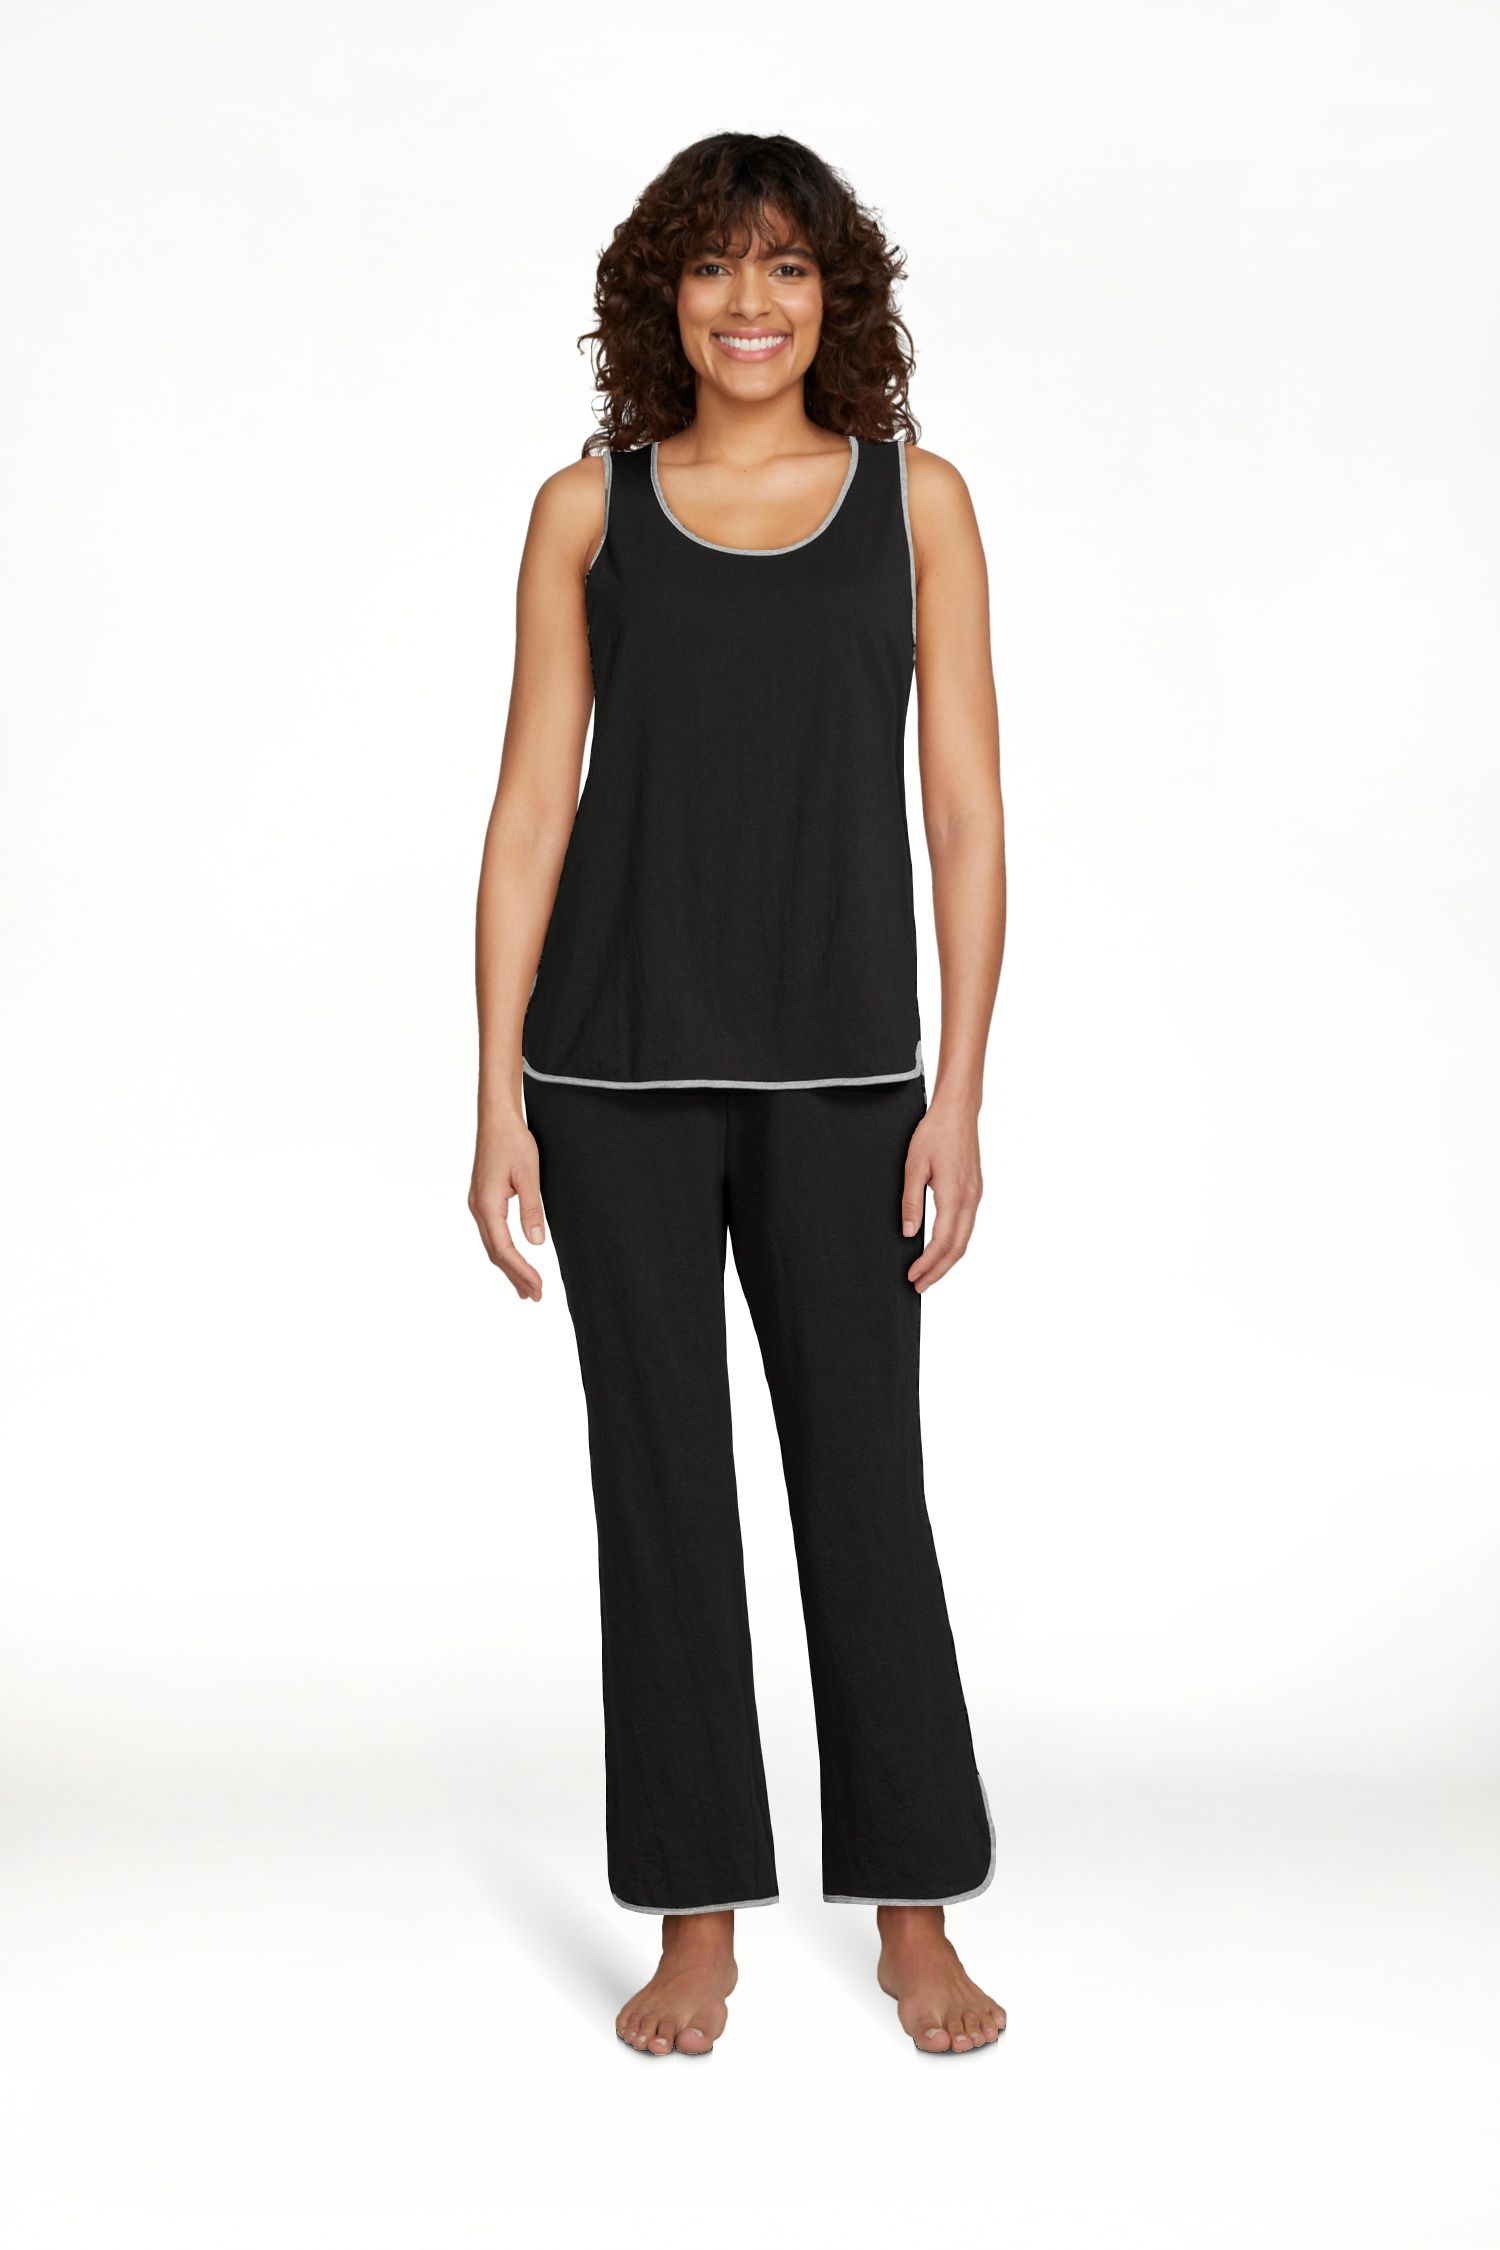 Joyspun Women's Cotton Blend Tank Top and Pants Pajama Set, 2-Piece, Sizes S to 3X | Walmart (US)